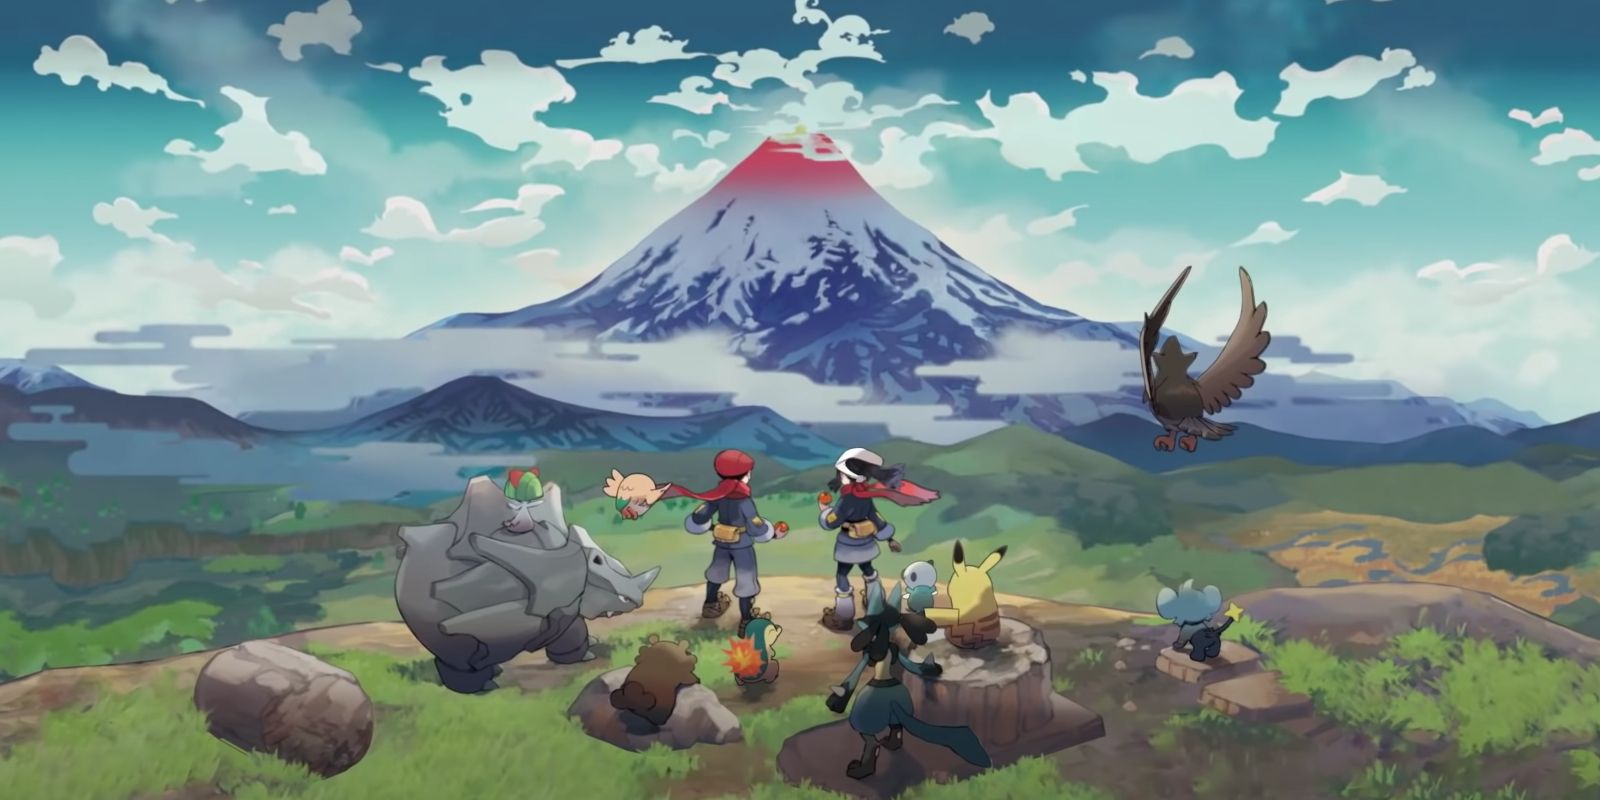 Pokemon Legends: Arceus latest gameplay trailer revealed 13 minutes of gameplay.